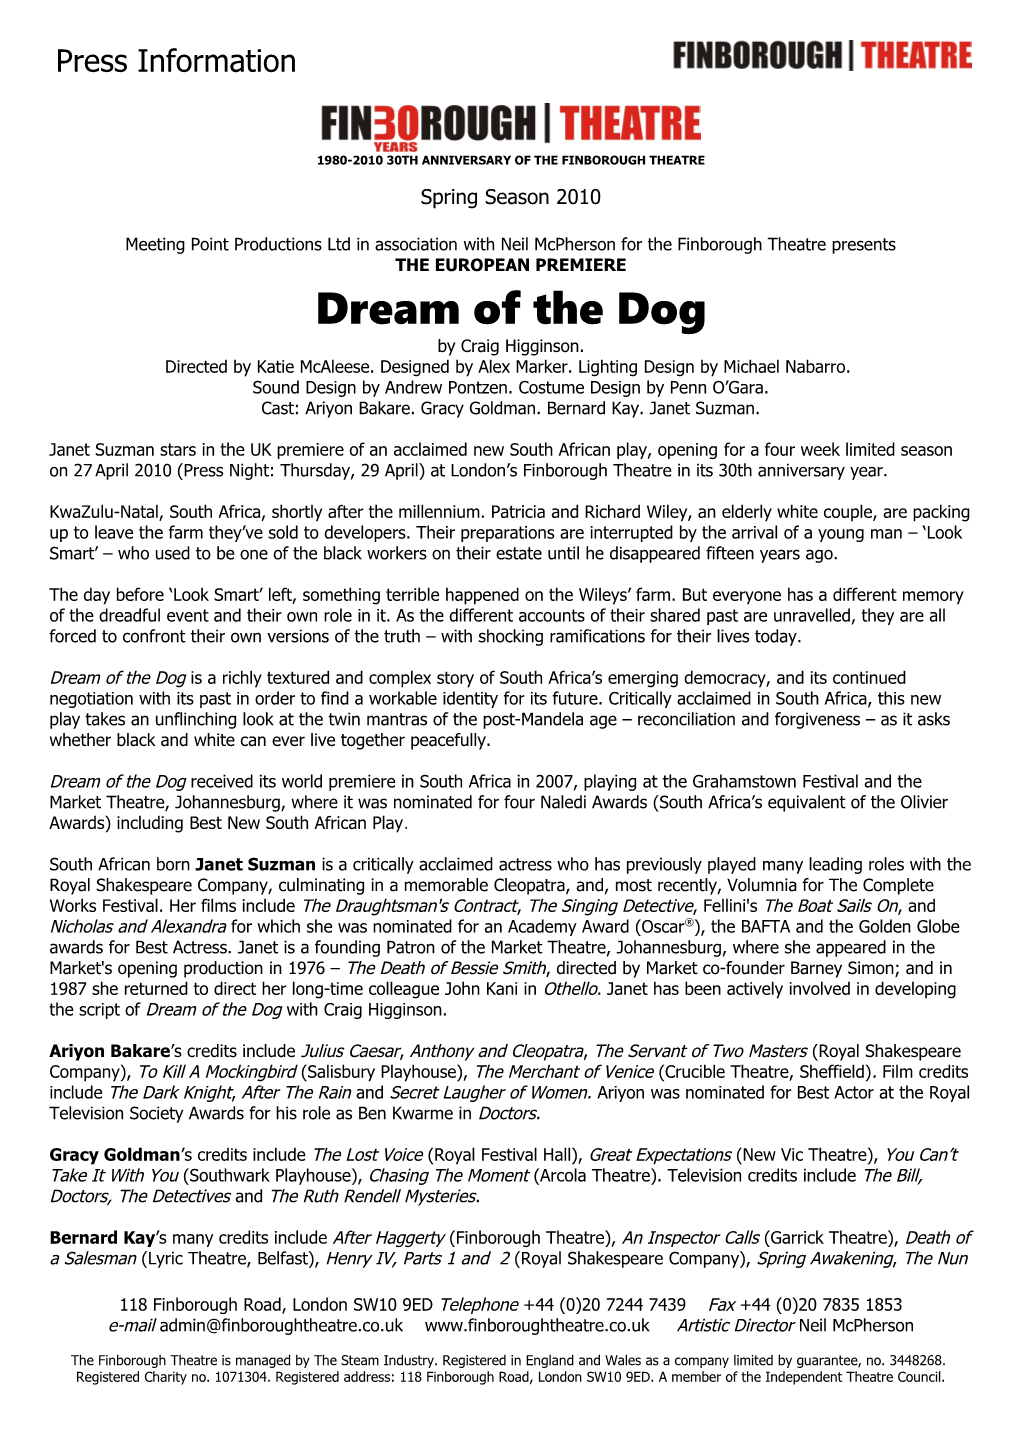 Press Dream of the Dog